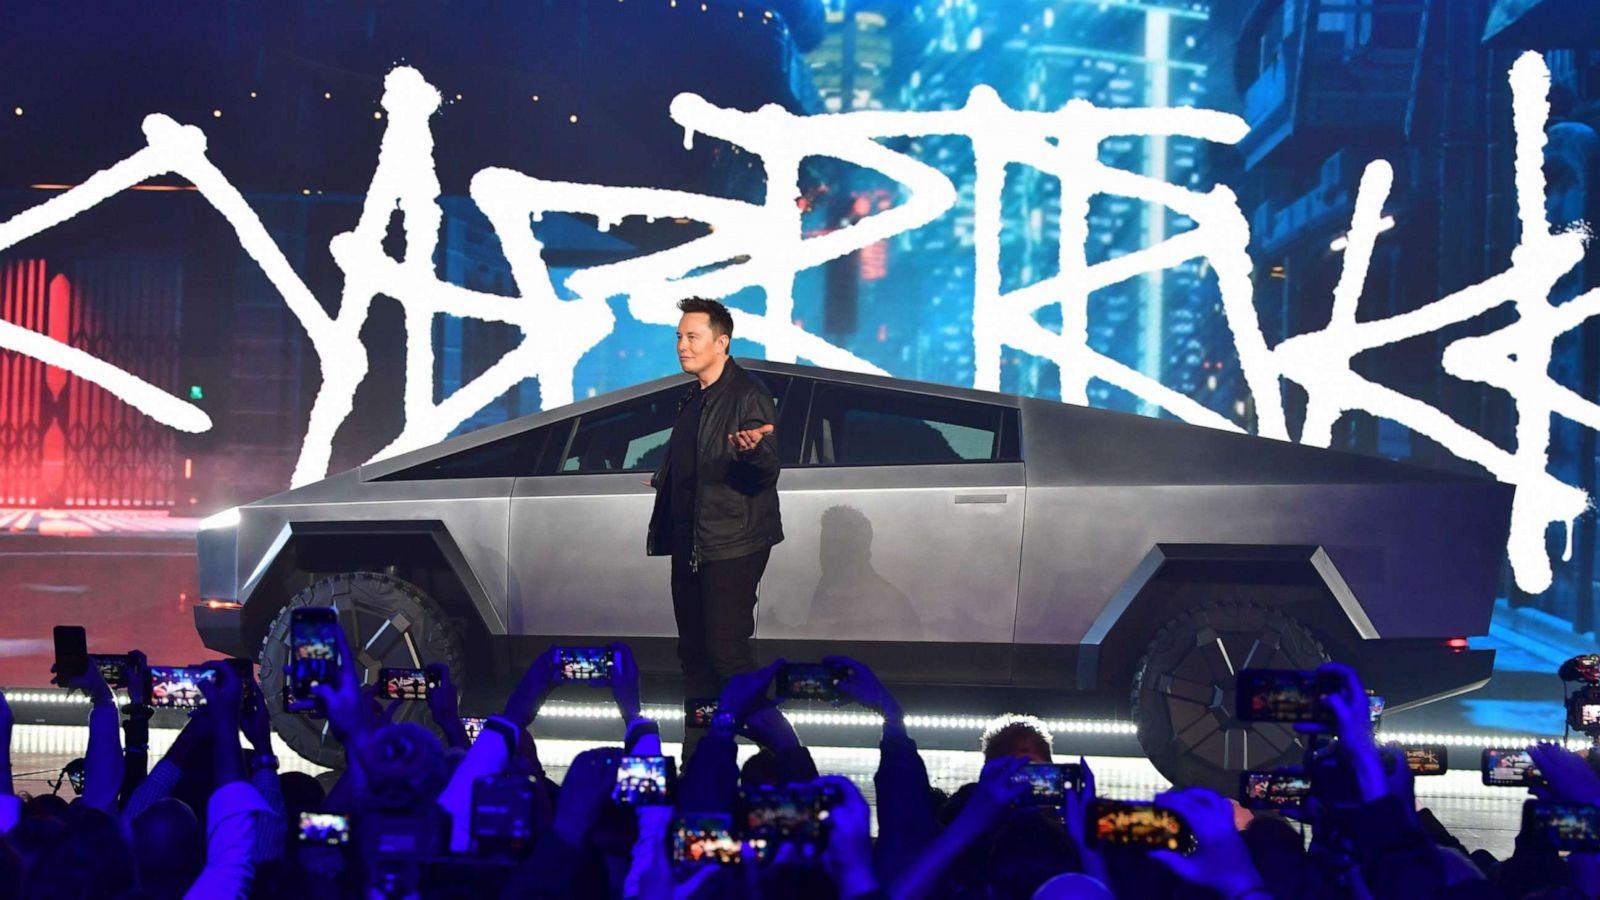 Tesla's Cybertruck has 000 preorders, Elon Musk says